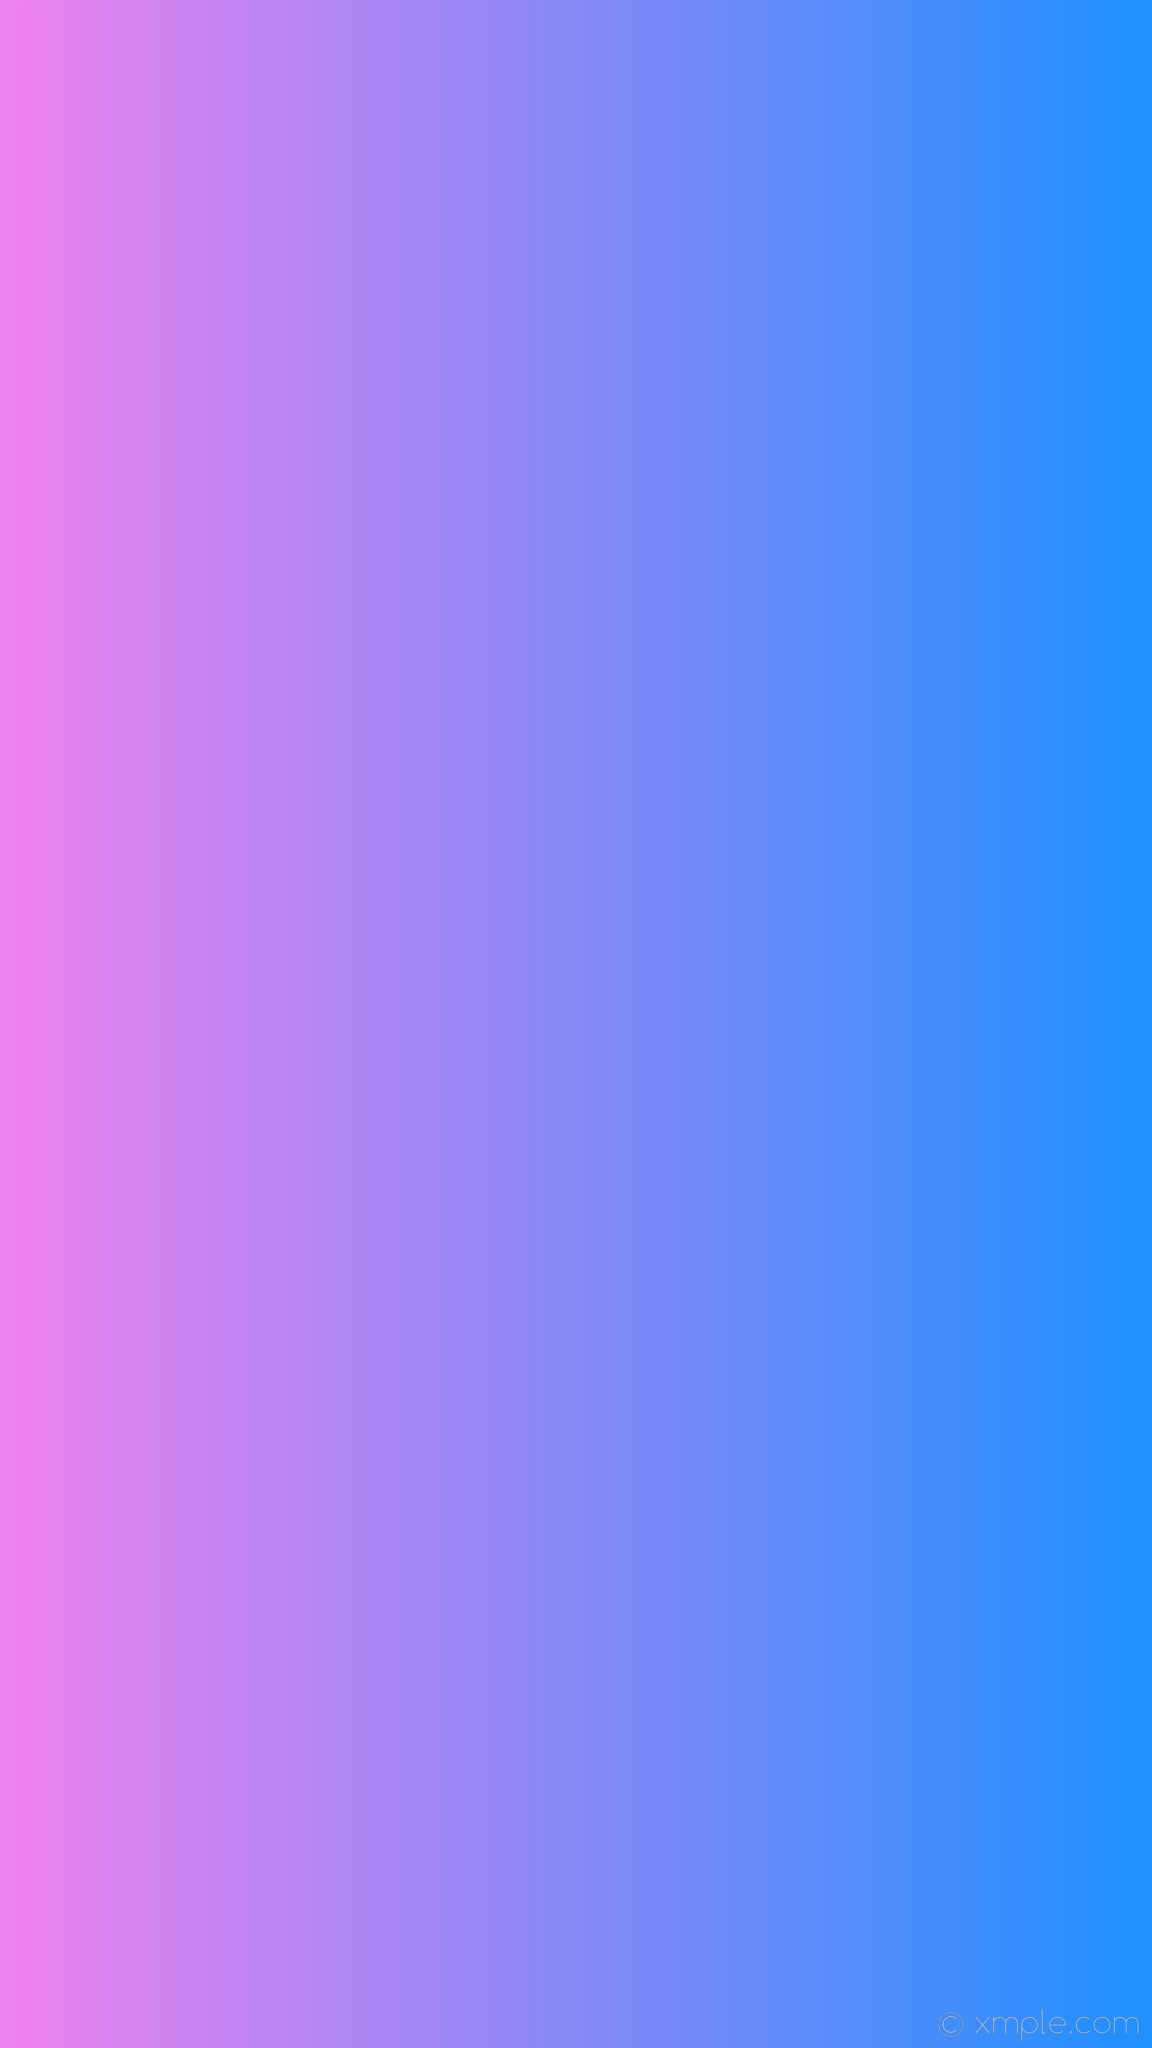 1152x2048 wallpaper gradient blue purple linear dodger blue violet #1e90ff #ee82ee 0Â°